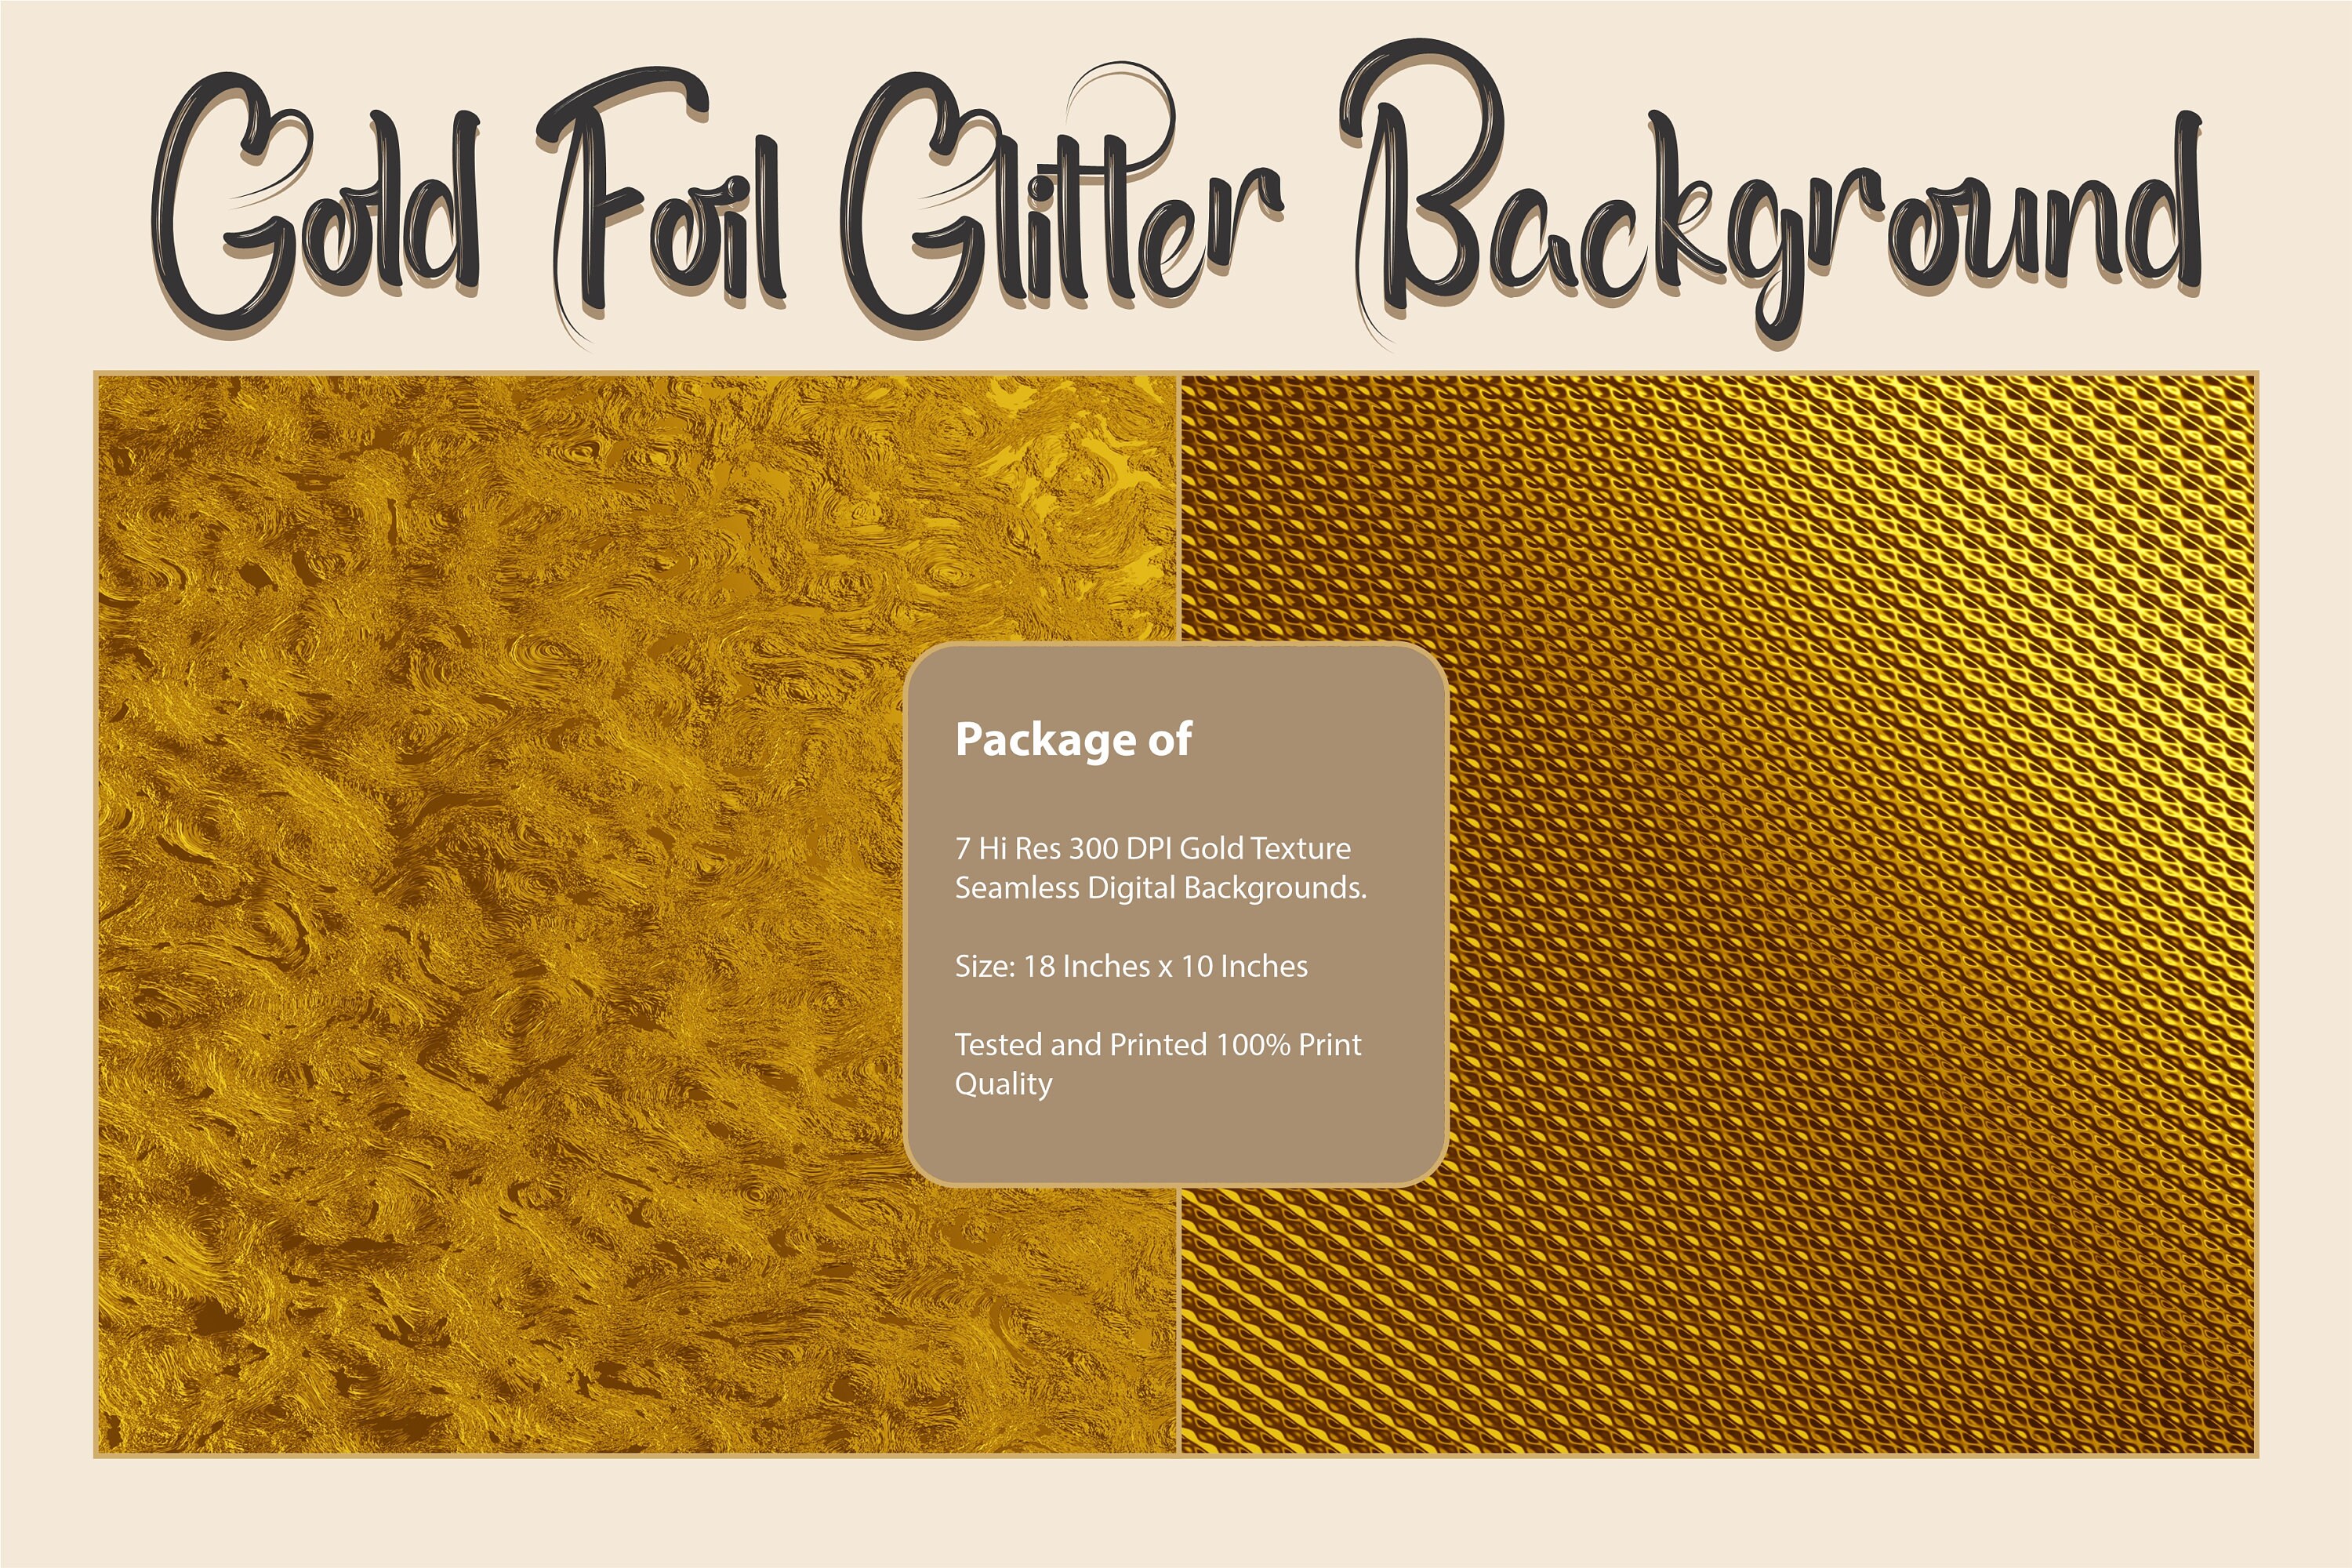 100+] Yellow Glitter Backgrounds